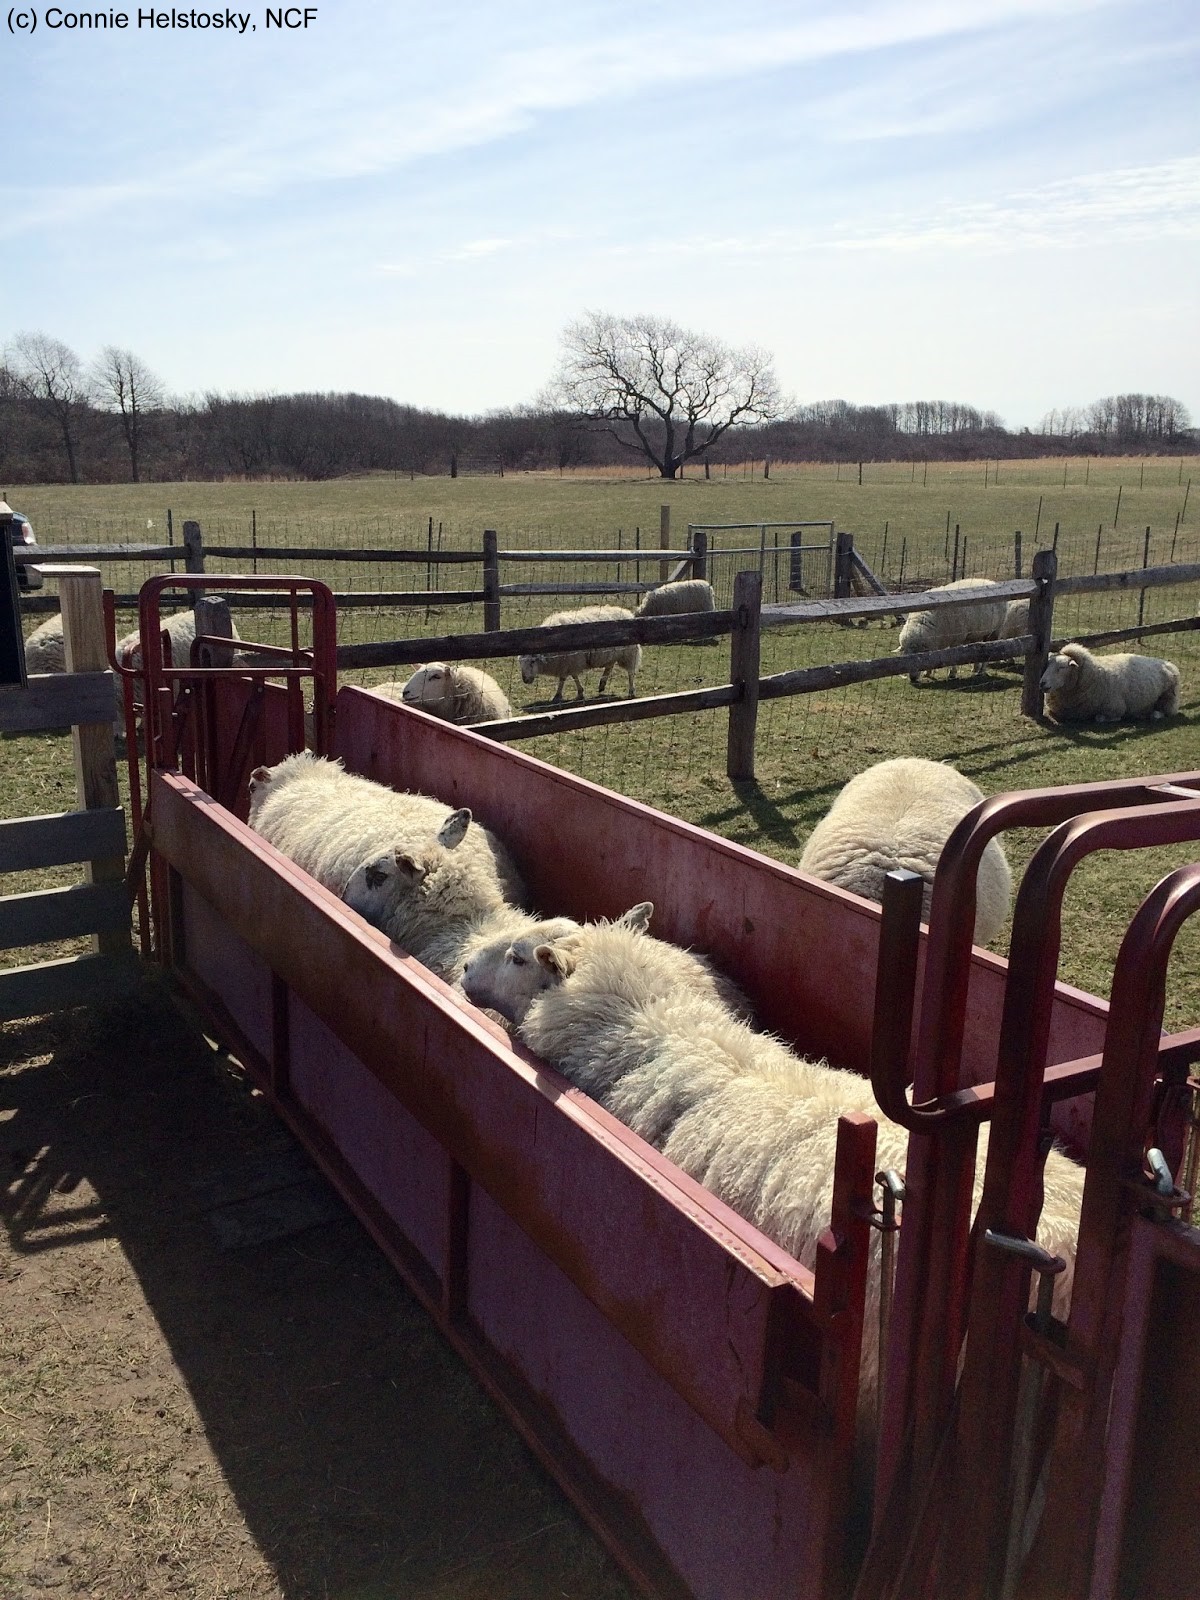 Sheep in chute watermarked